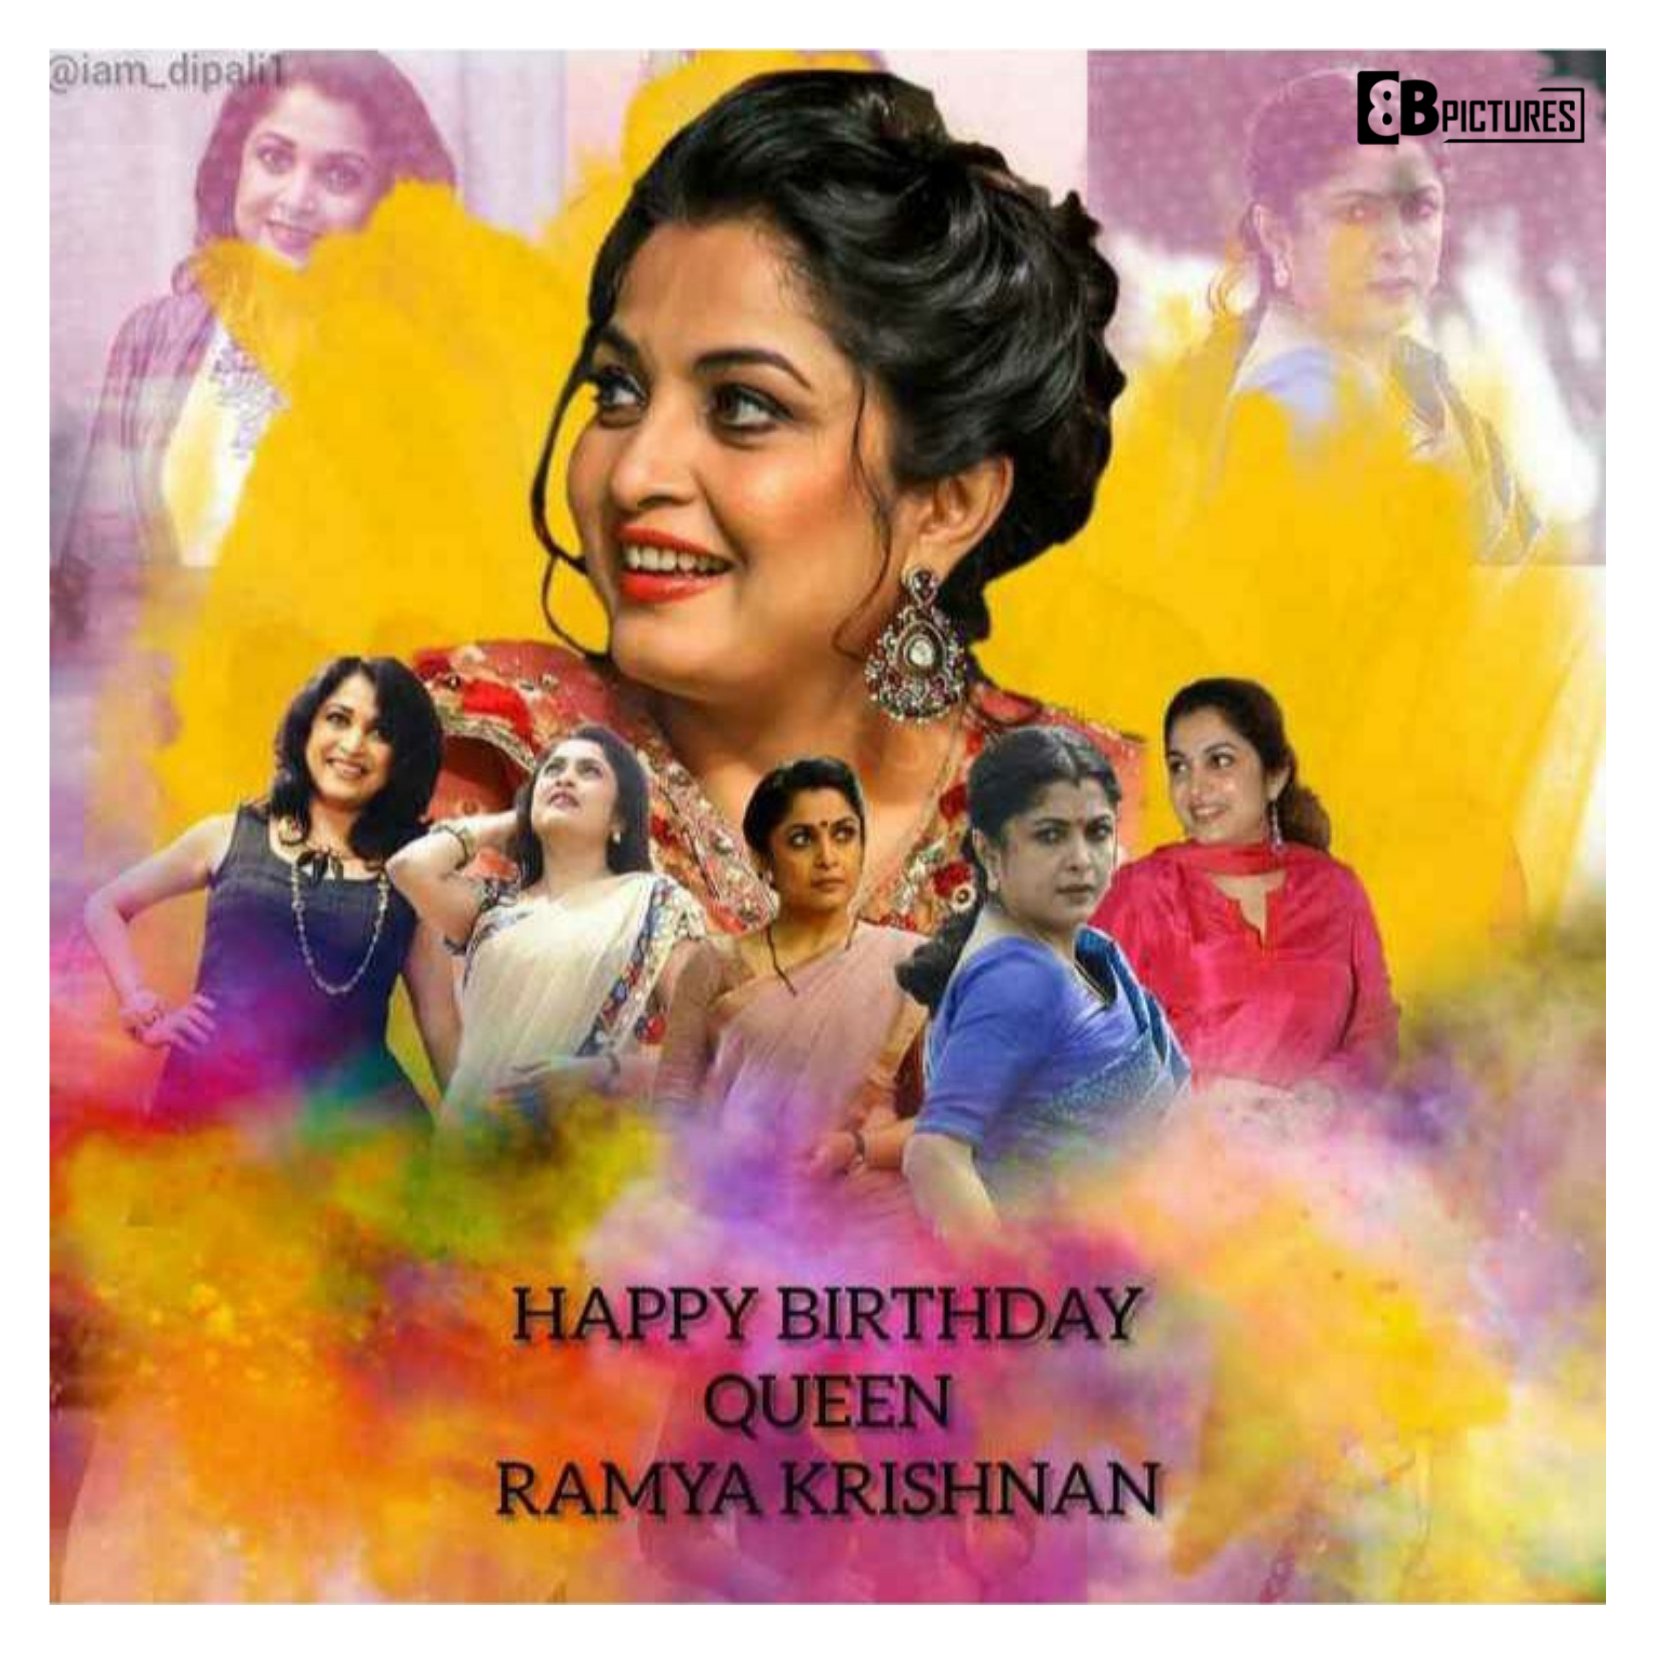 Happy birthday Ramya krishnan   